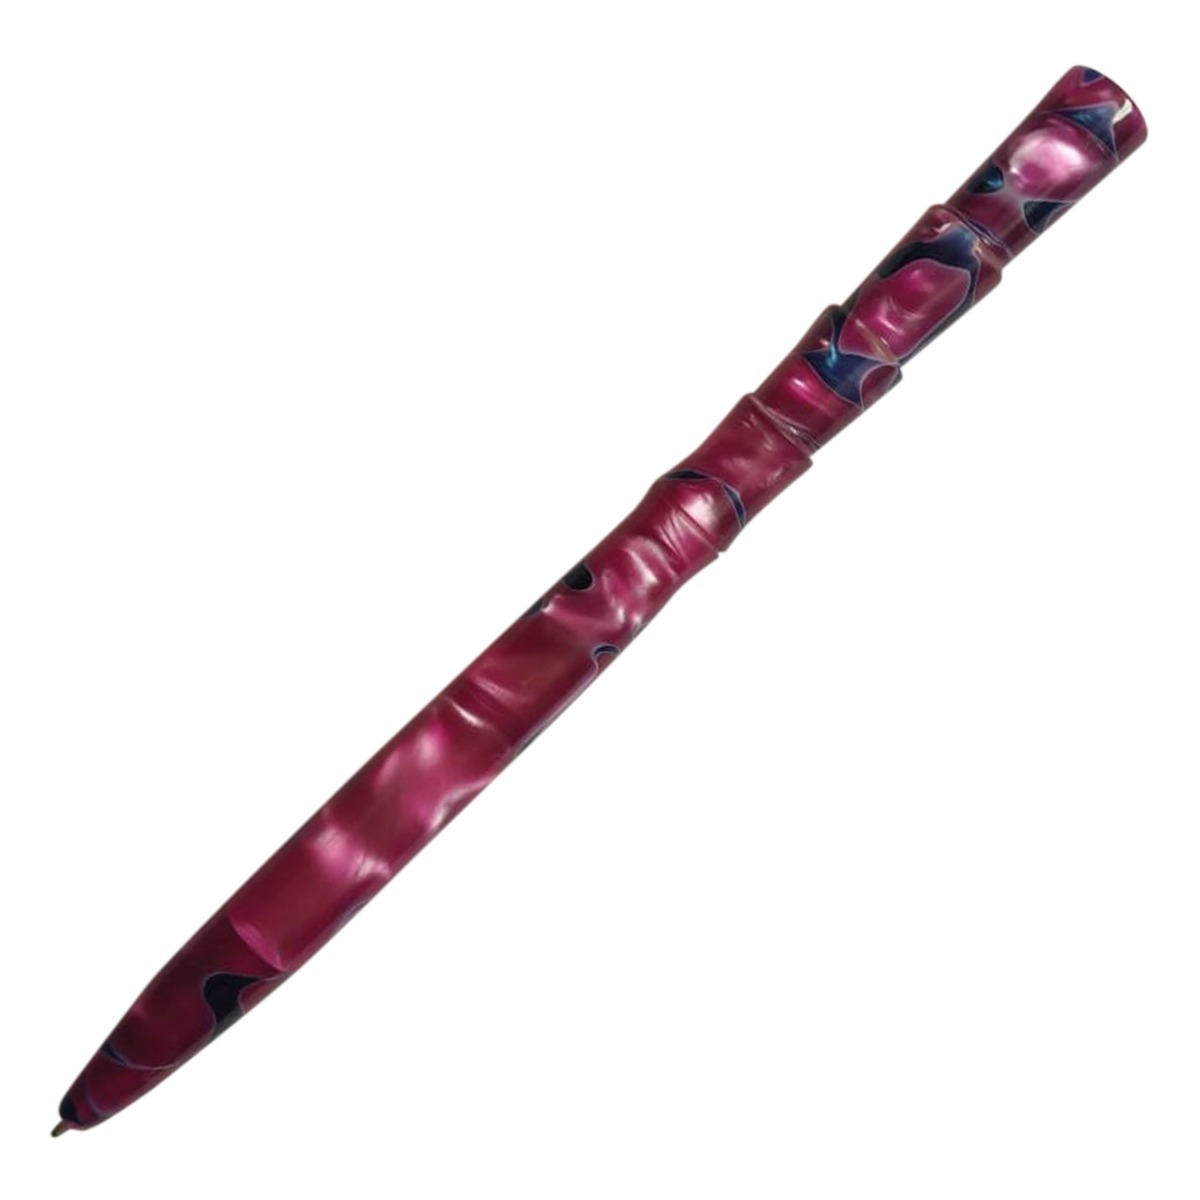 Handmade Ranga Pens Marrown and white Colored Flat  Pointed Ultra Smooth Flow Medium Tip Desktop Ball Pen Model.No 17836